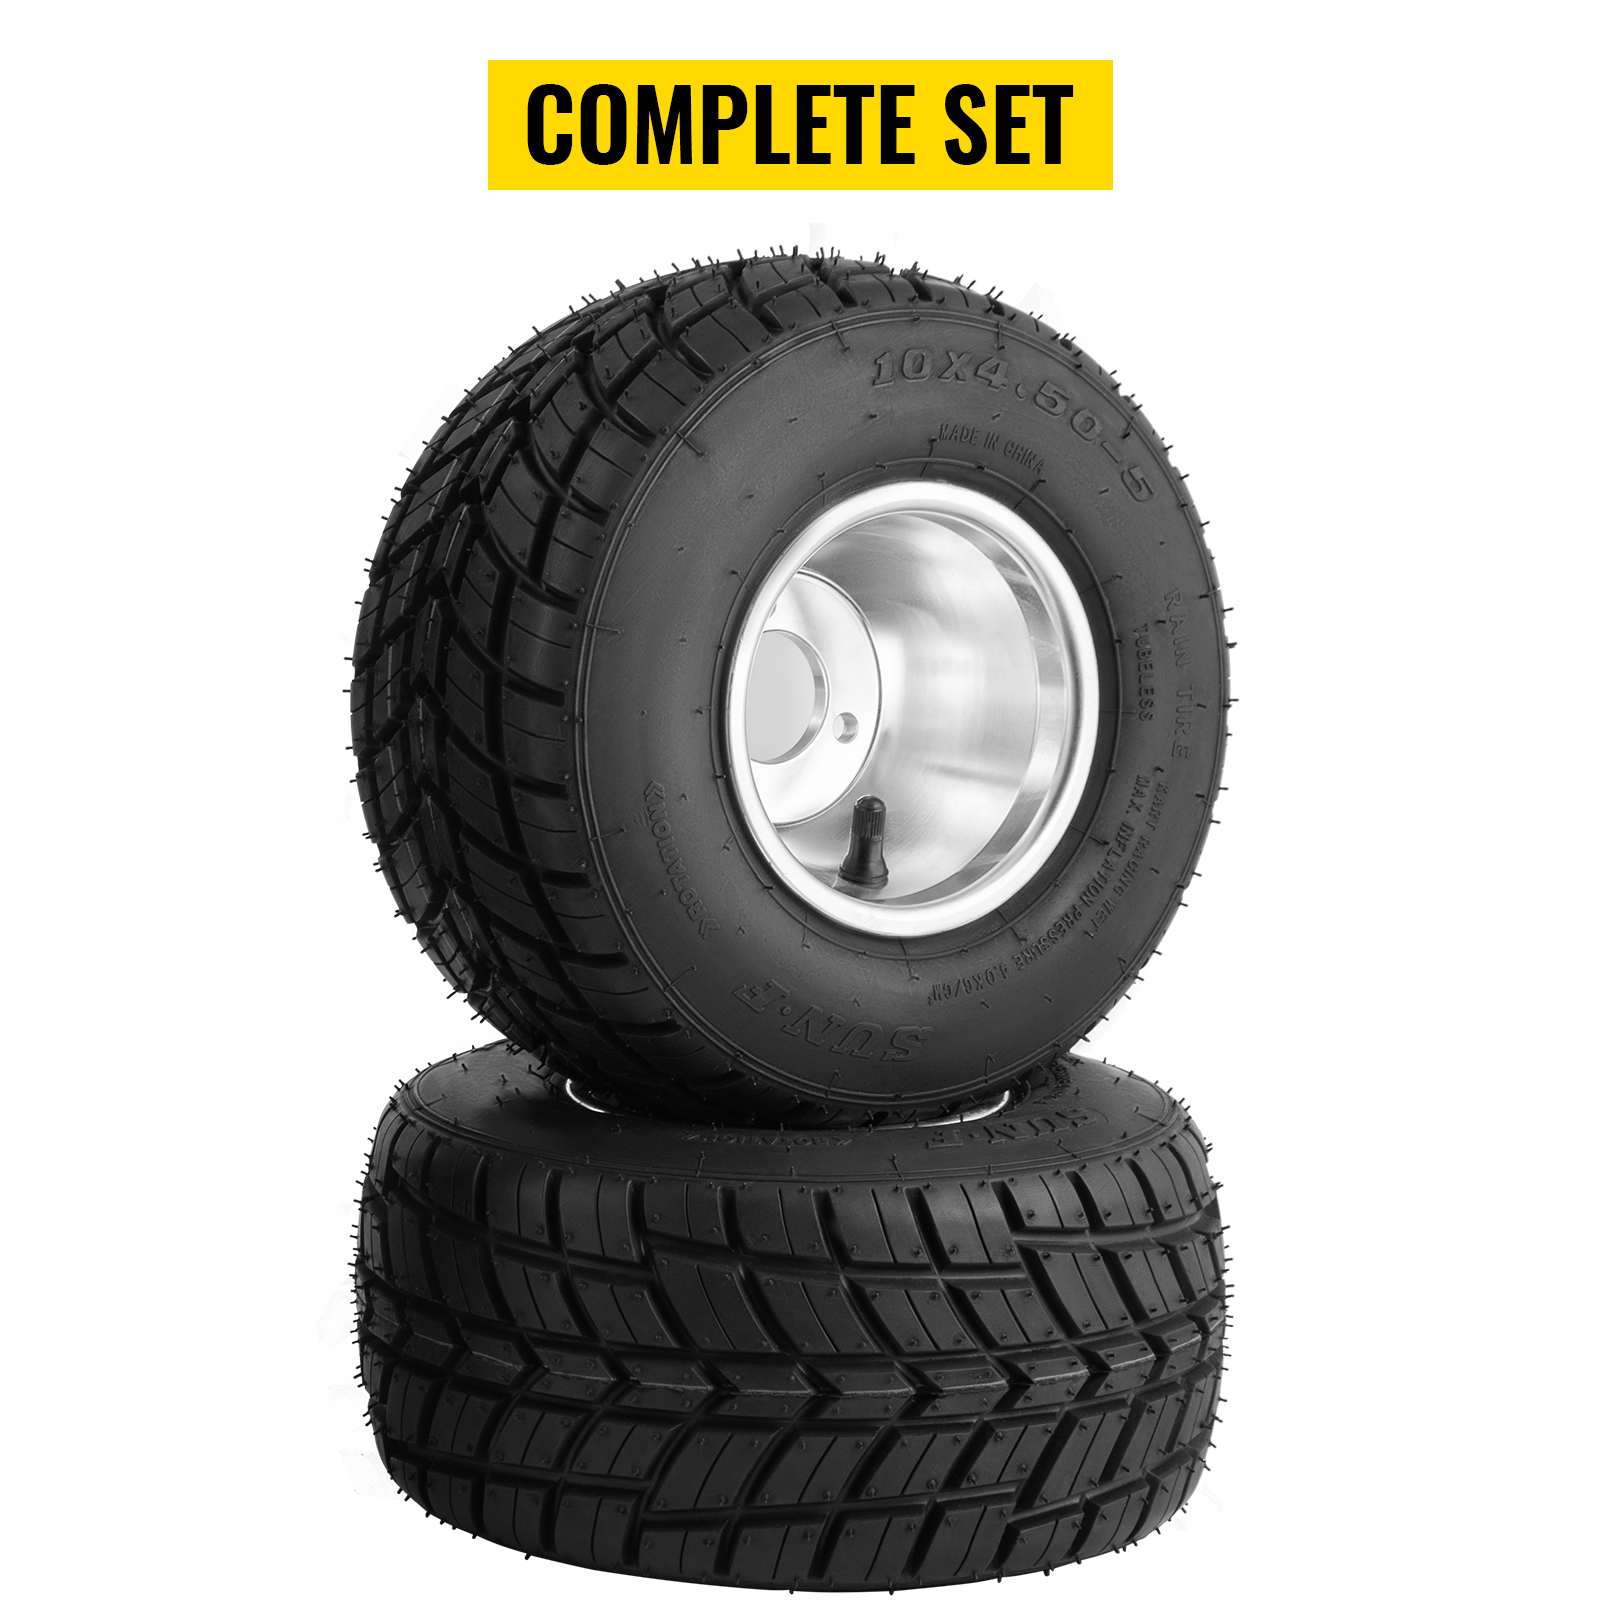 2x front 10X4.50-5 2x rear 11x6.0-5 go kart A street tire tread Aluminum Wheel 